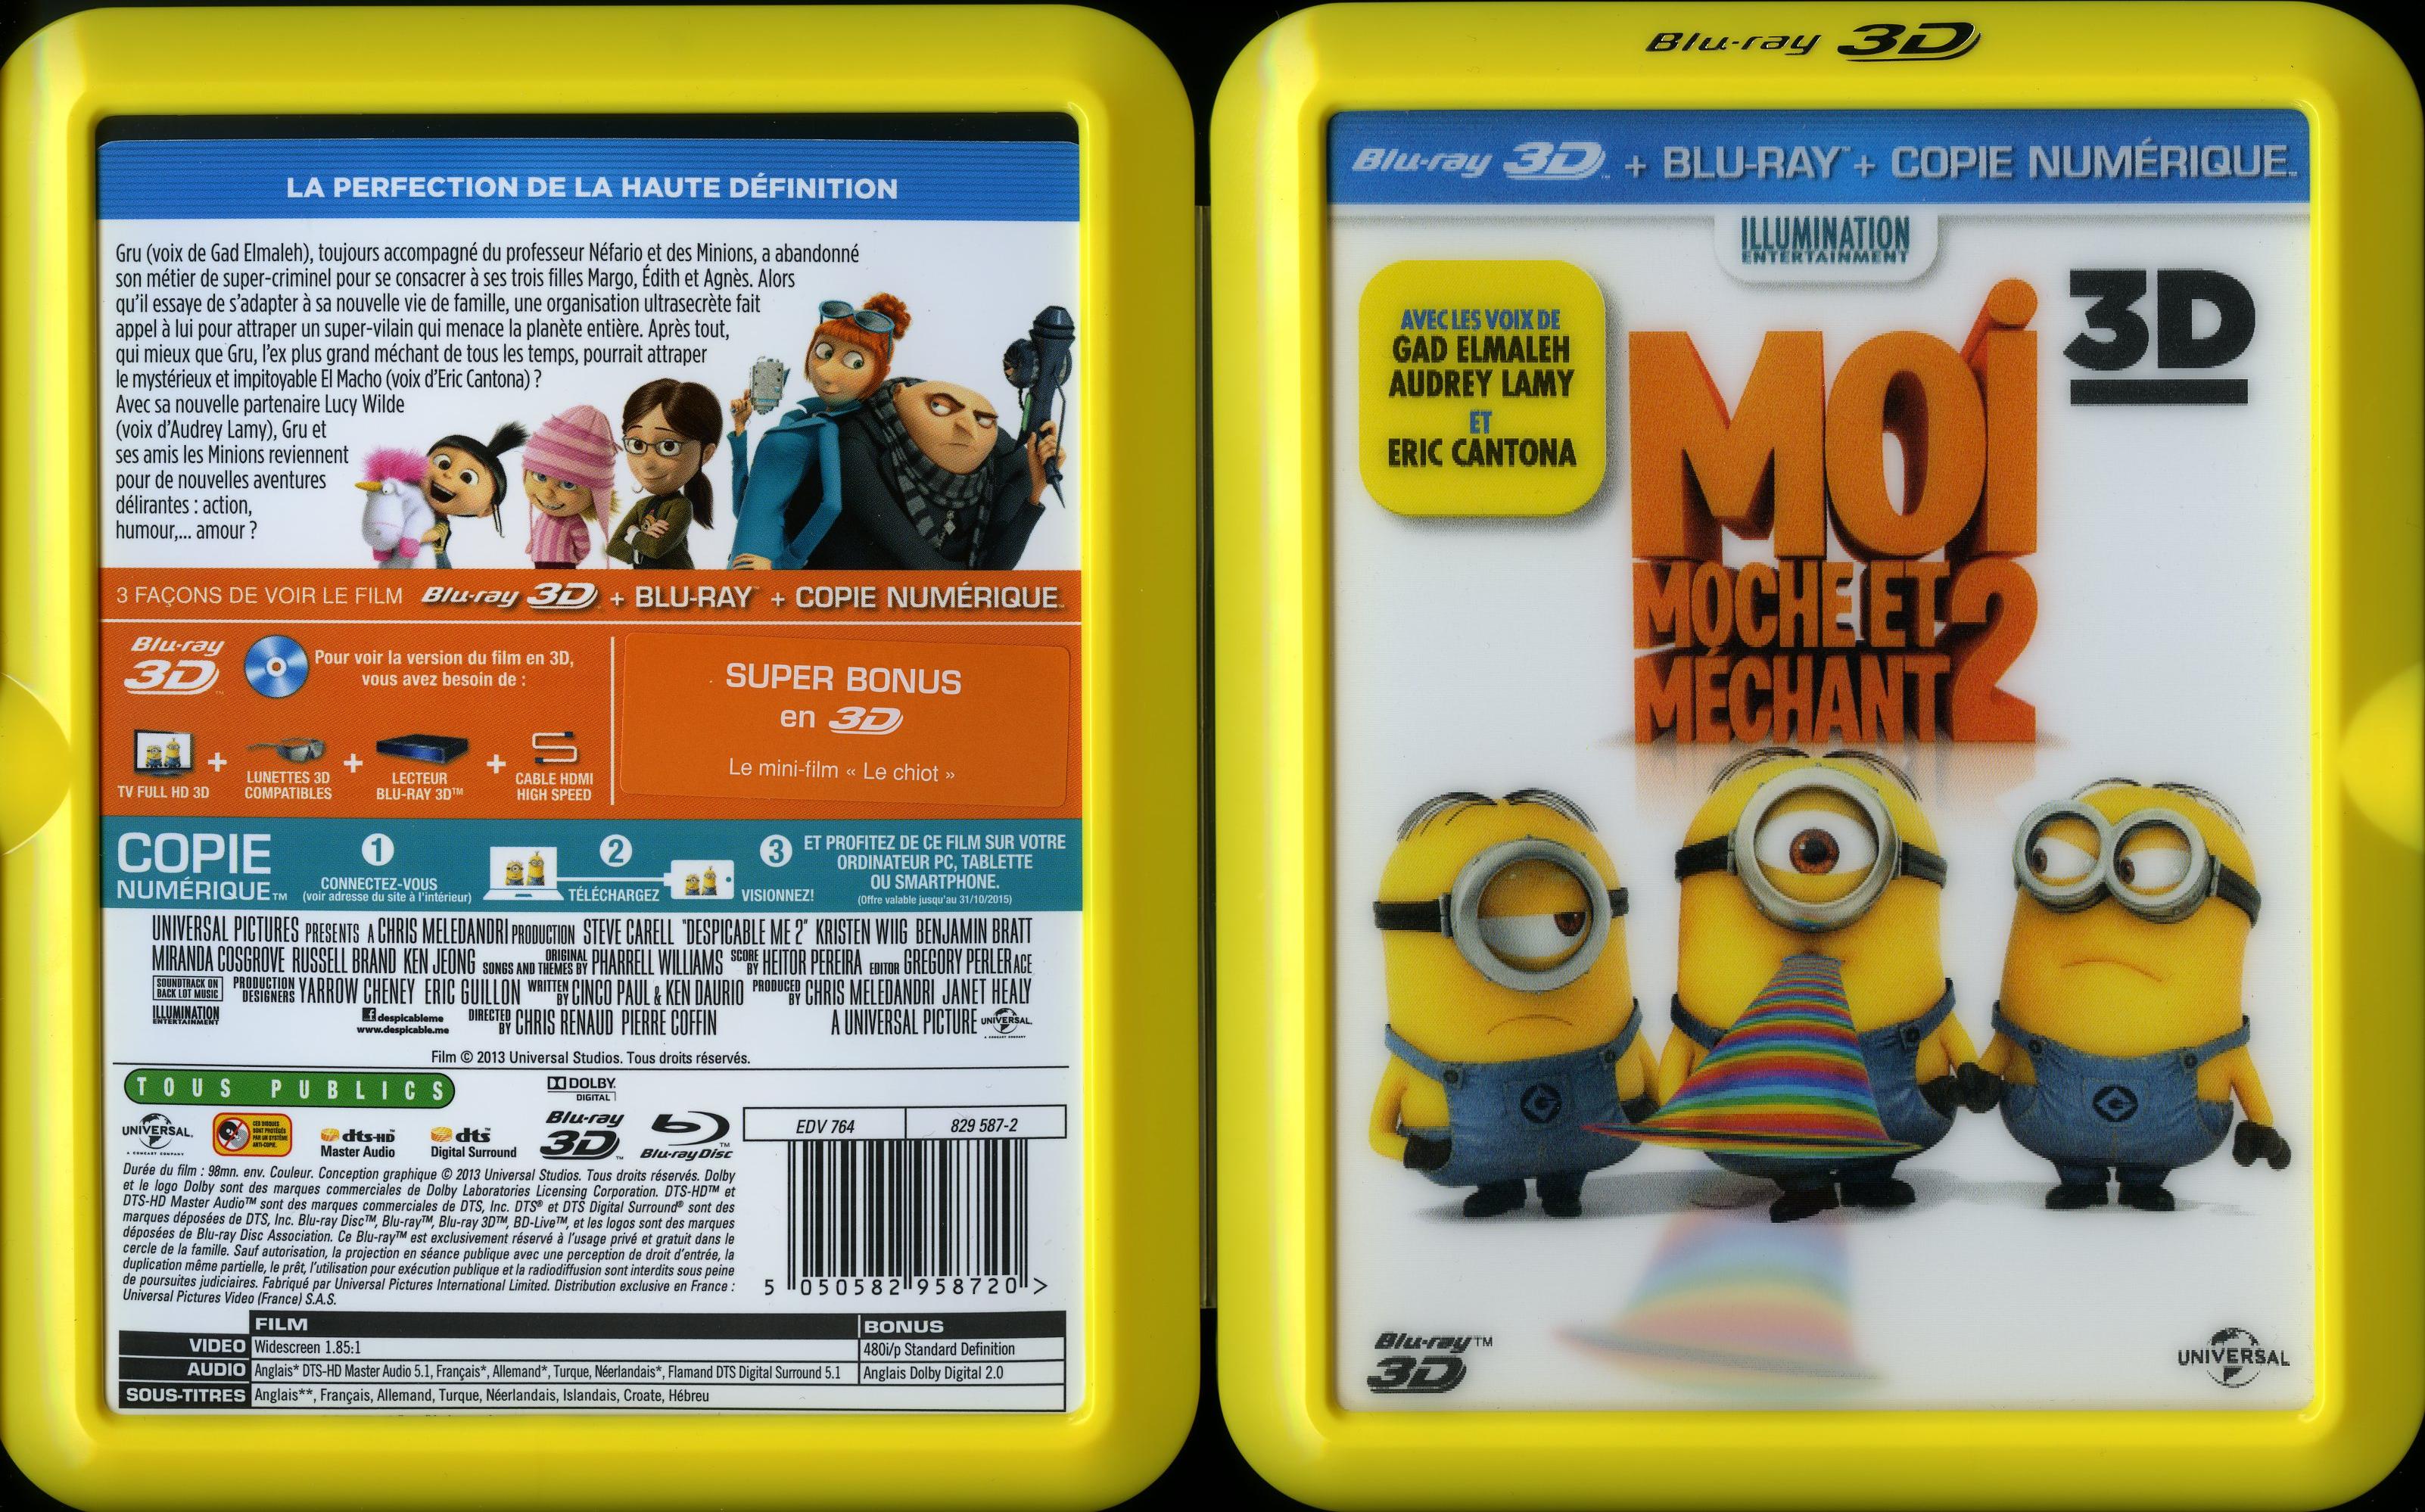 Jaquette DVD Moi moche et mchant 2 (BLU-RAY) v2